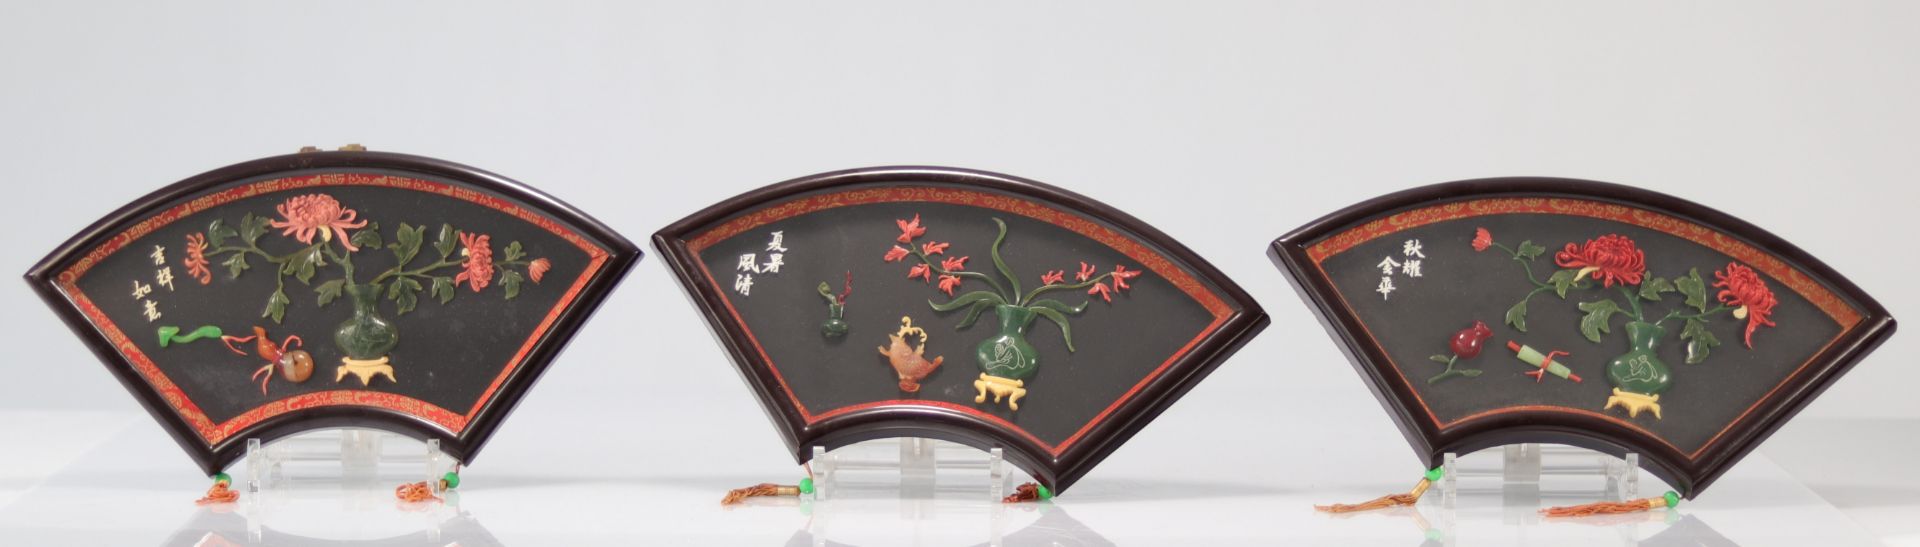 China - jade fan decoration, hard stone coral -